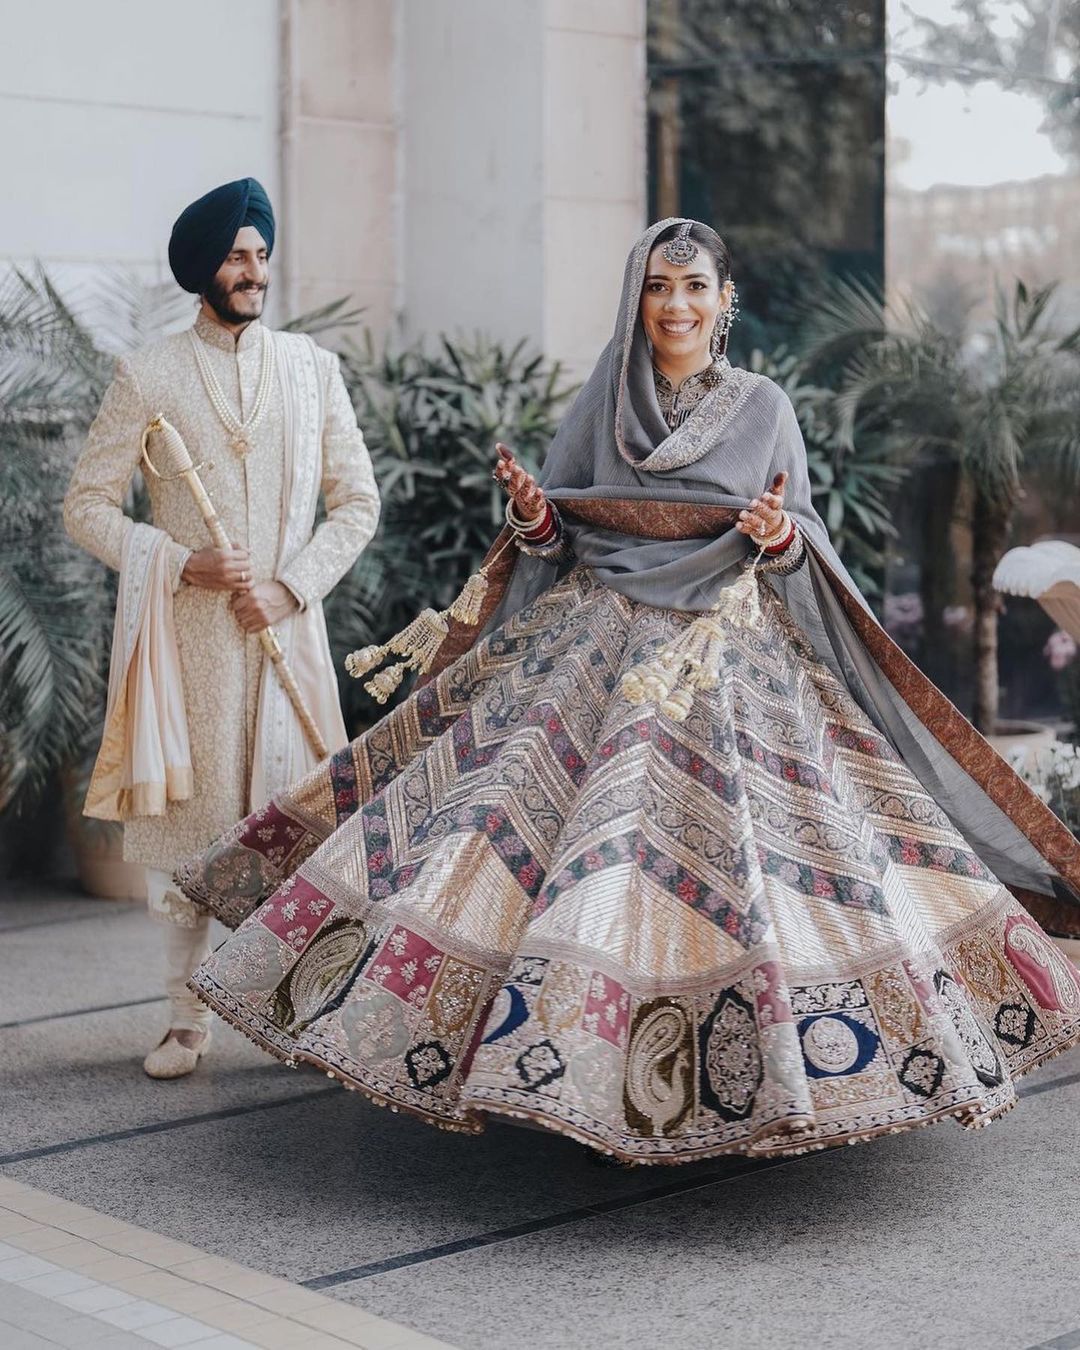 Trending blue grey color designer lehenga choli for wedding buy it now –  Joshindia